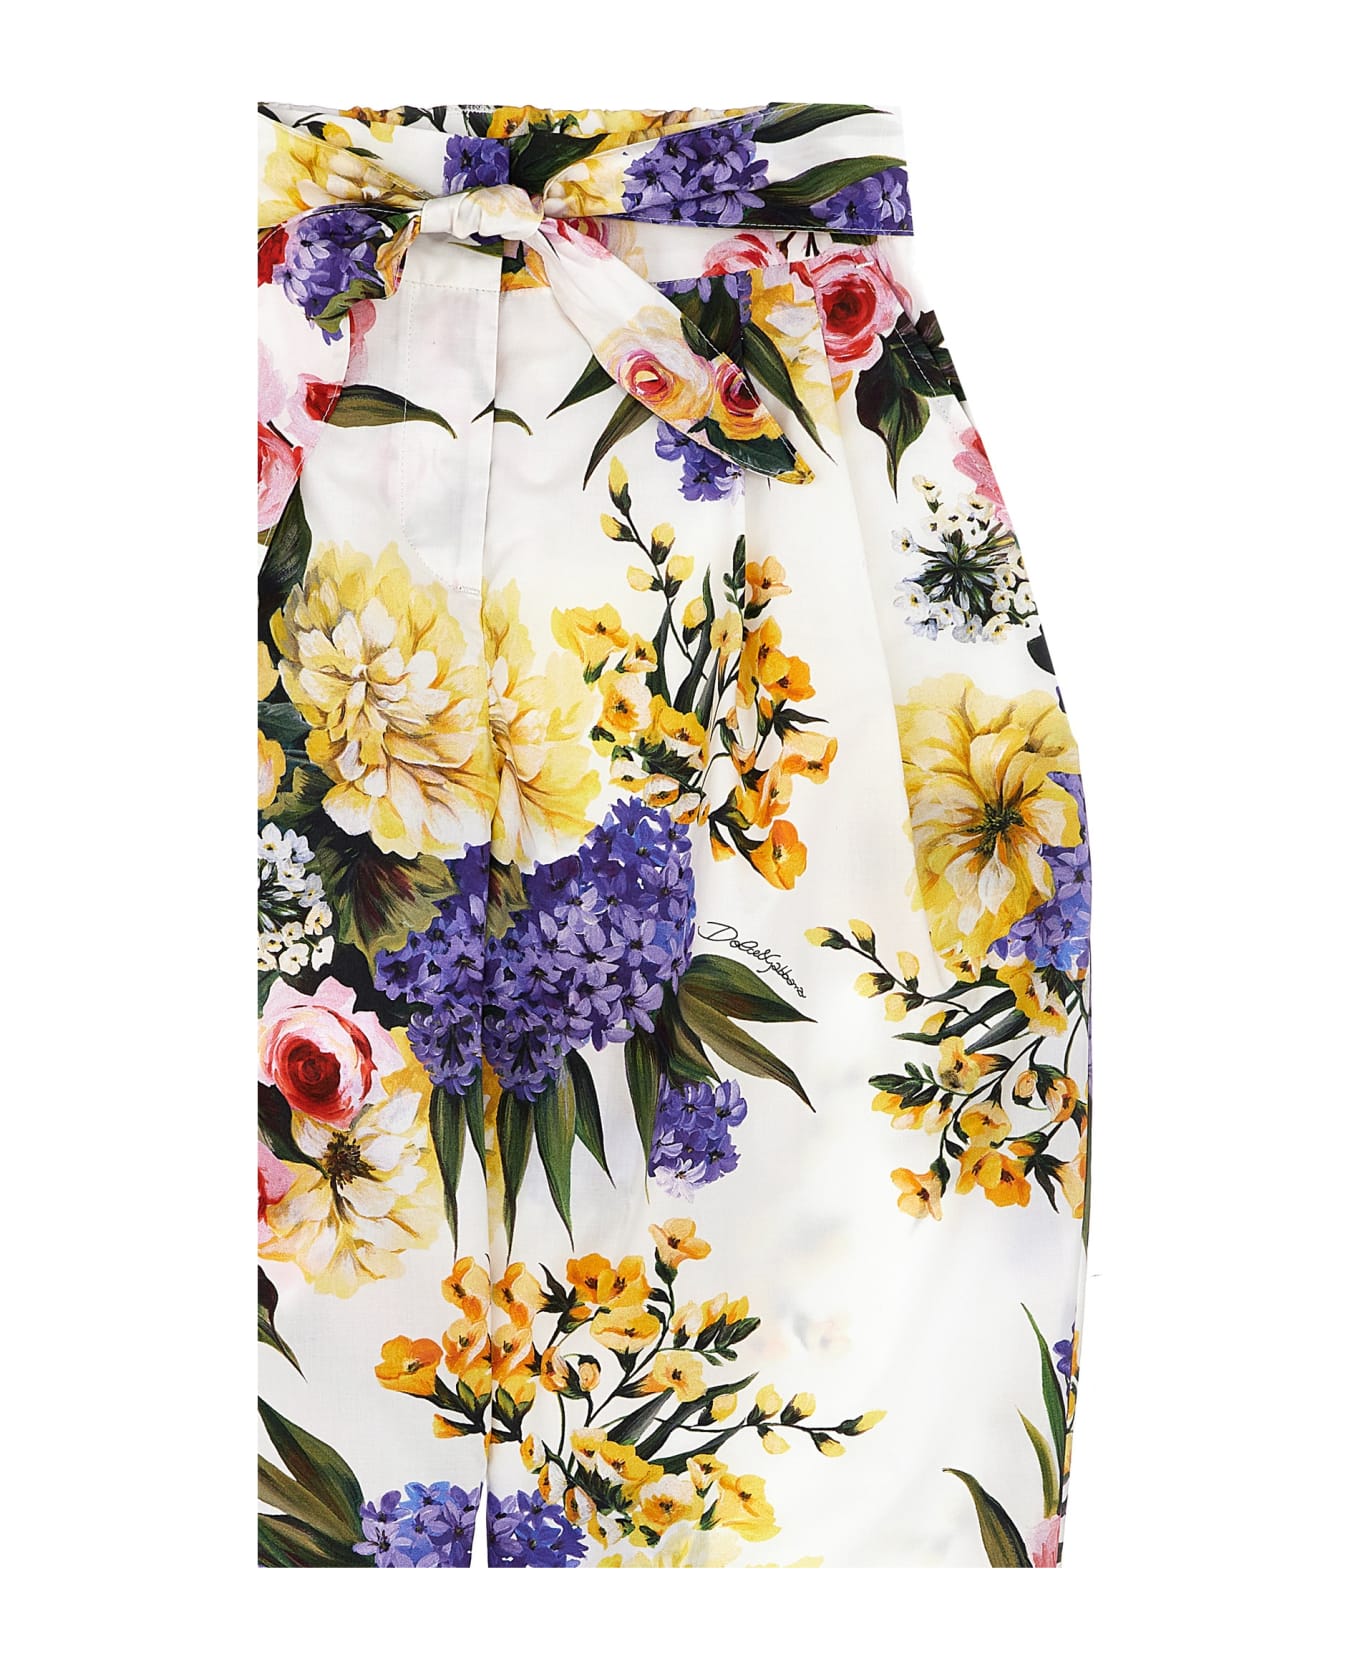 Dolce & Gabbana Floral Print Trousers - Multicolor